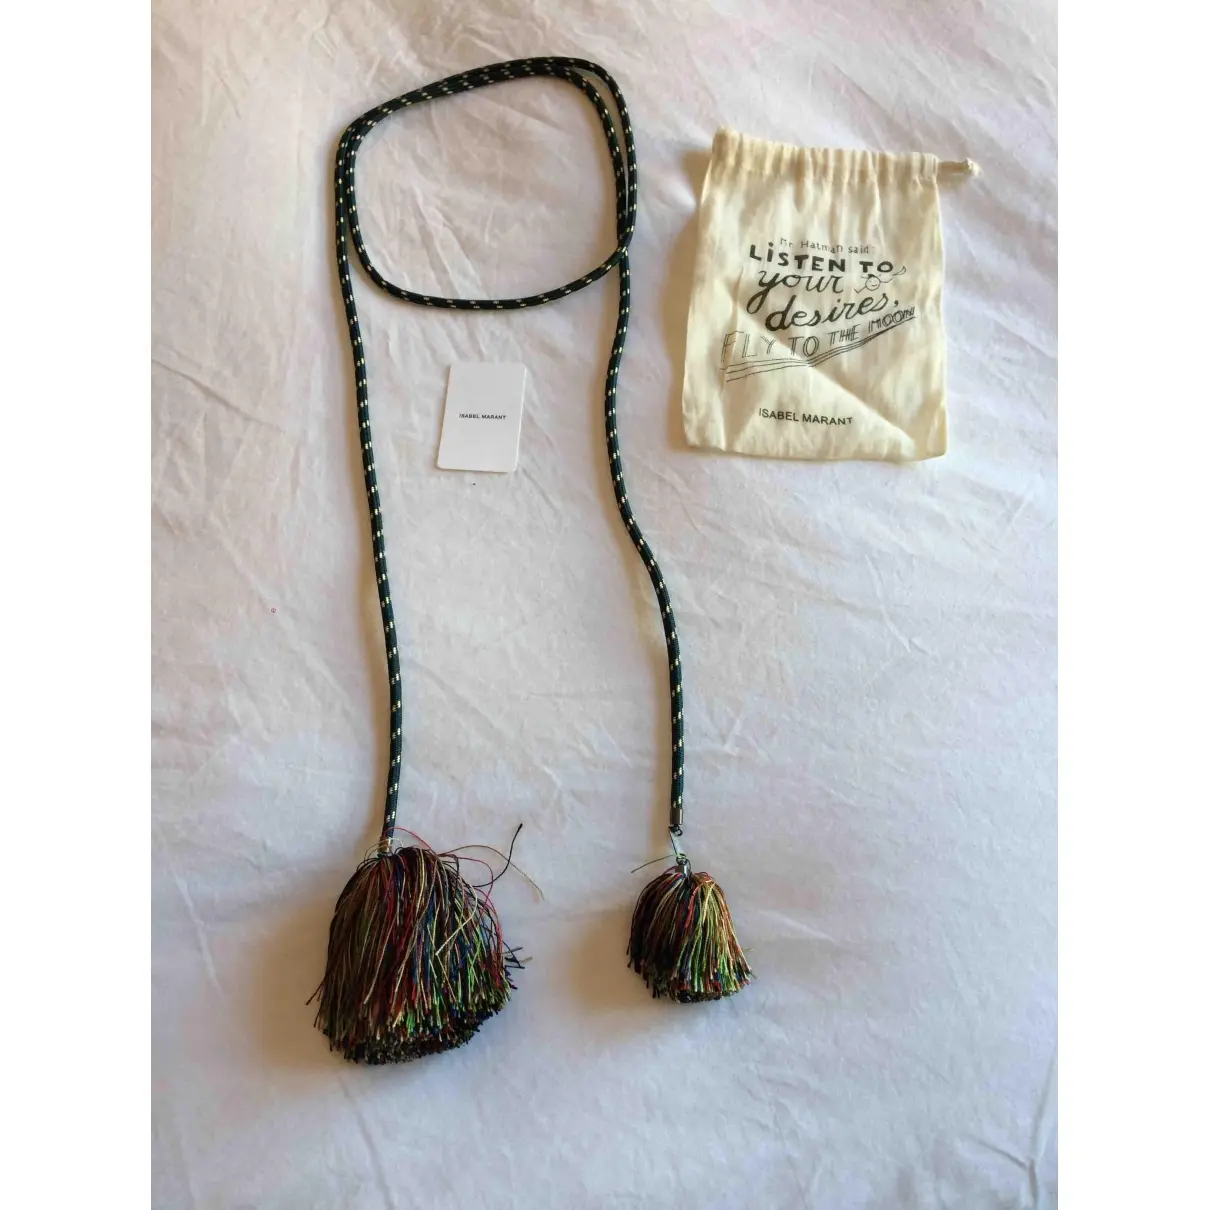 Buy Isabel Marant Cloth necklace online